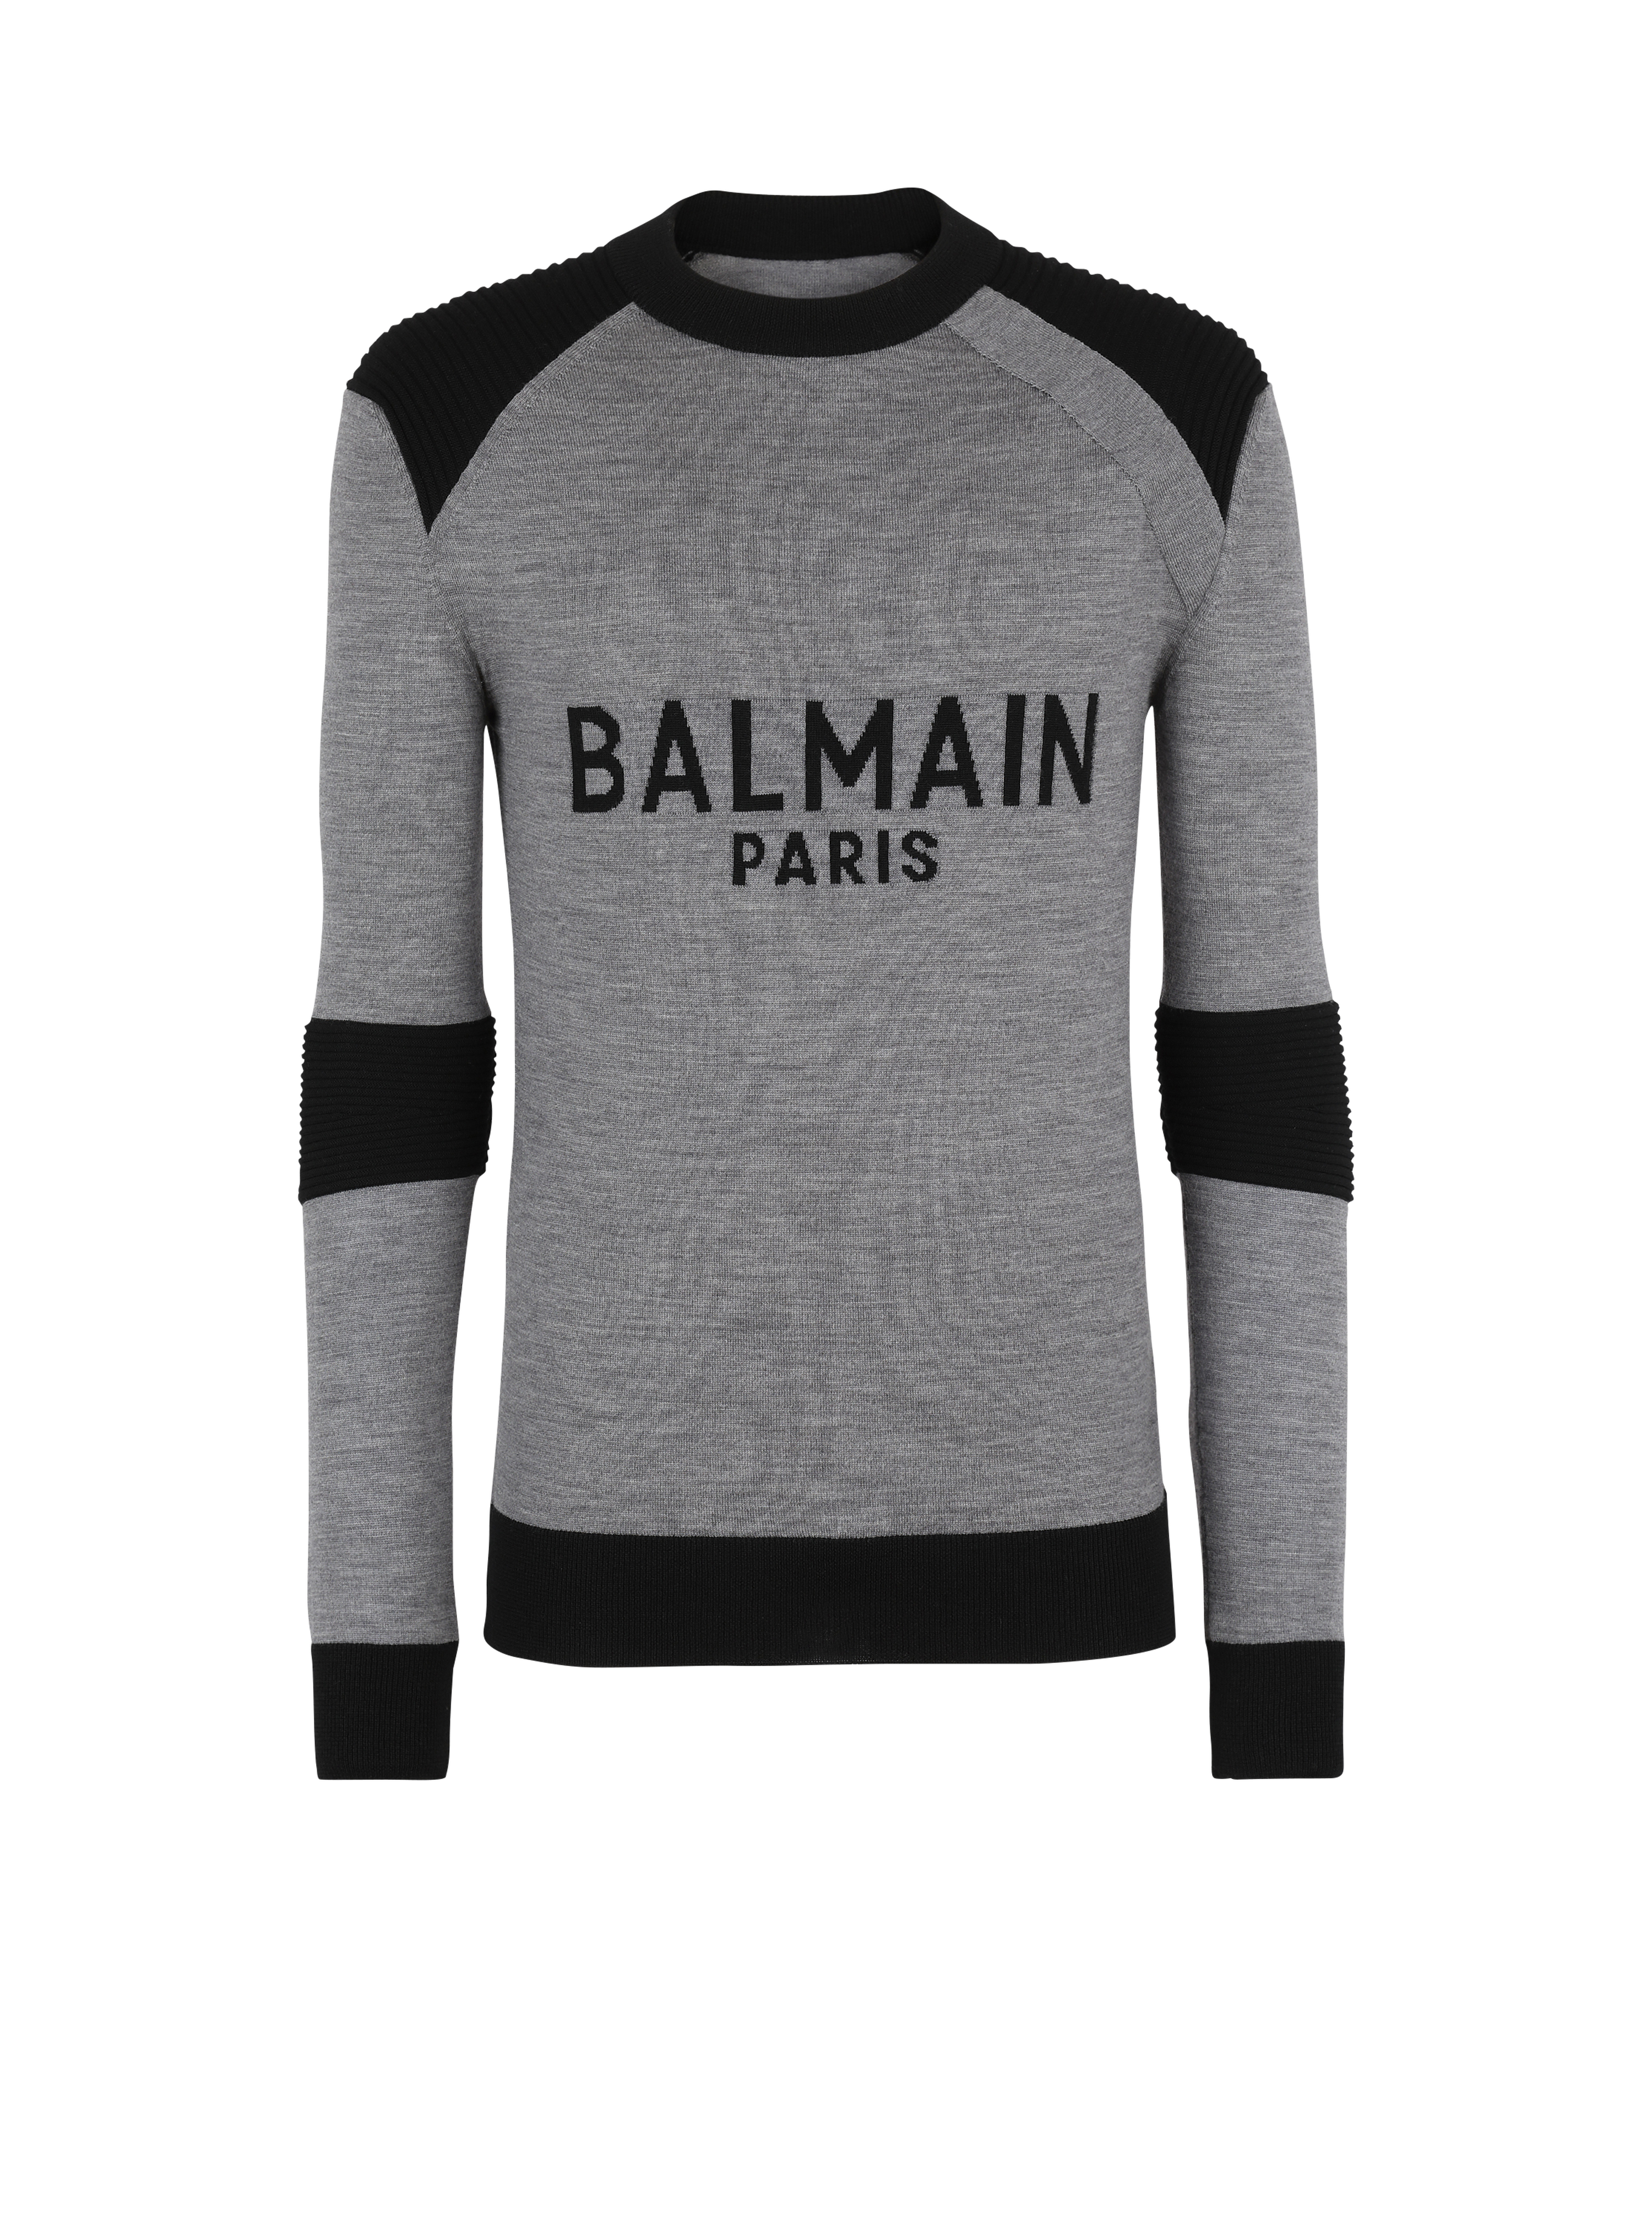 Maglia in lana con logo Balmain Paris, grigio